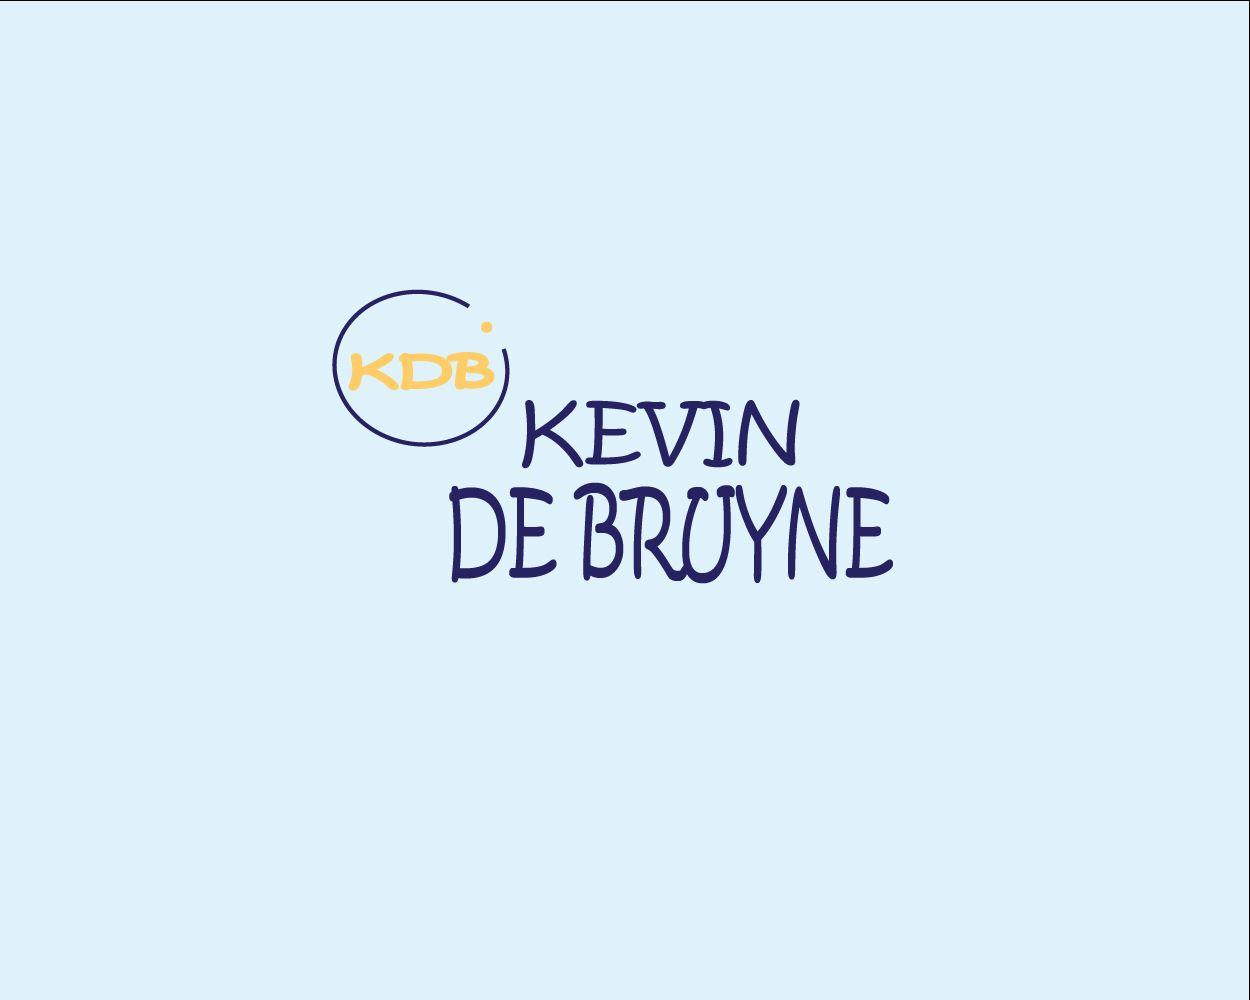 Kdb Logo - MOHAMEDSGAP: Kevin De Bruyne ( KDB ) Logo || Man City Player KDB Logo